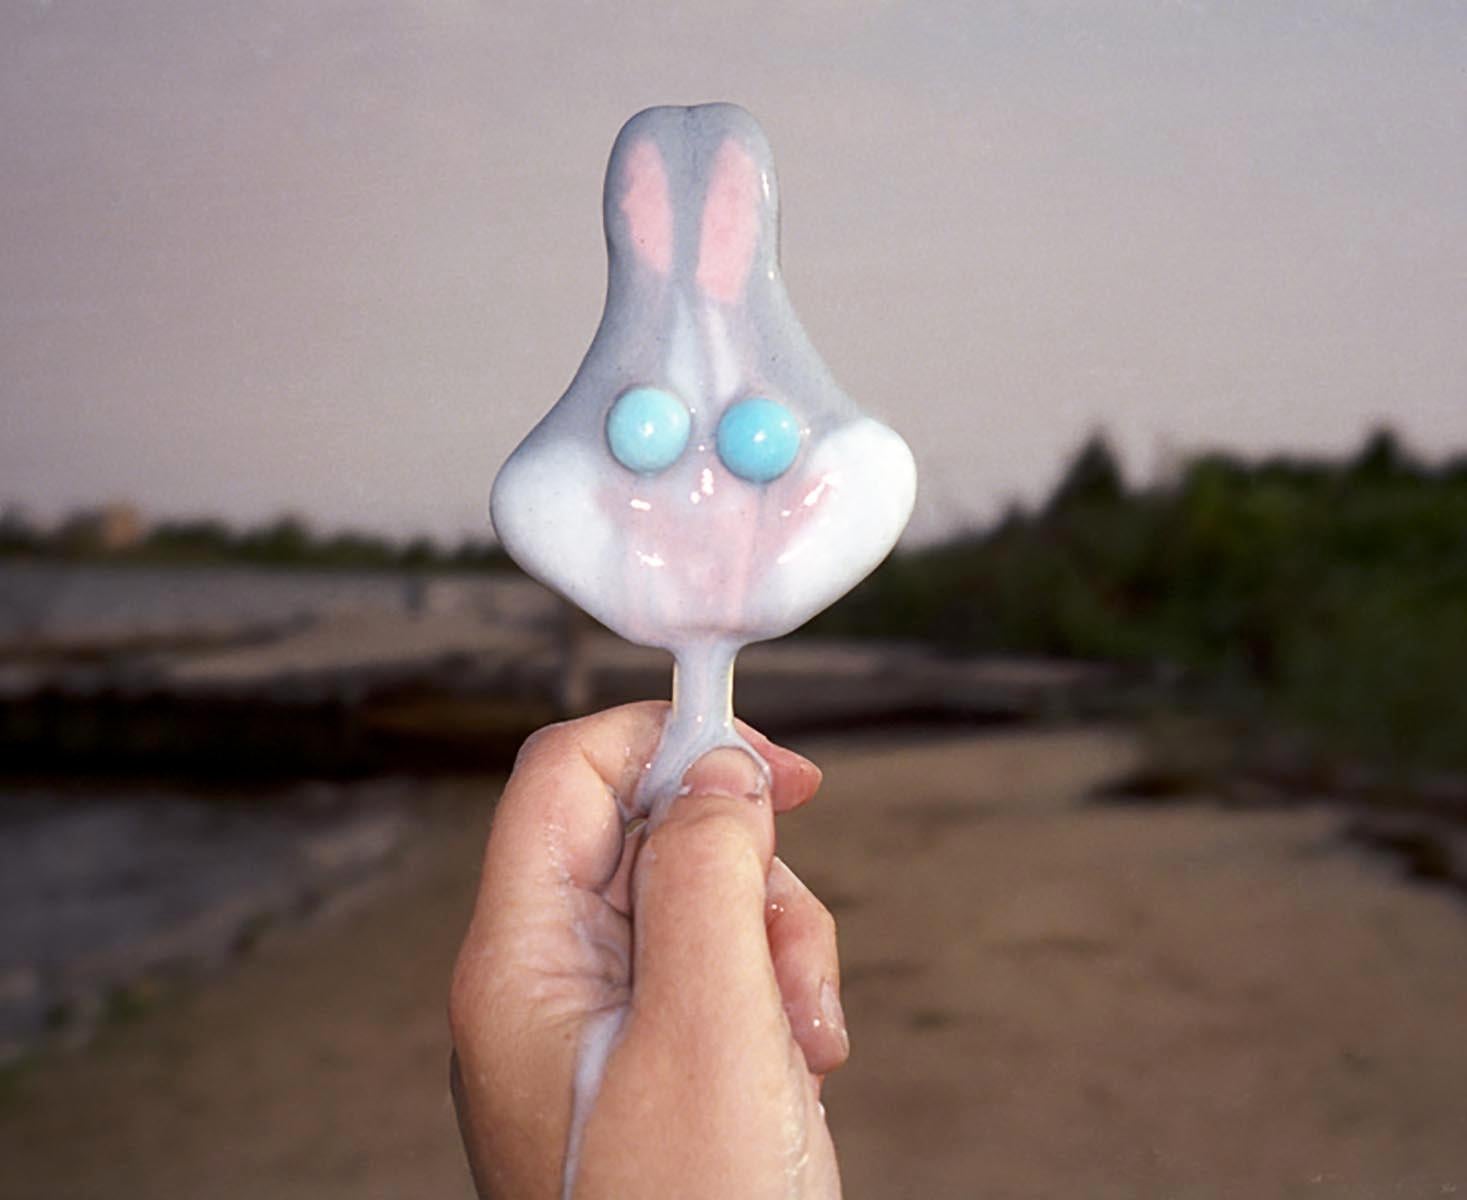 Meredith Allen Color Photograph - Atlantic Avenue (bugs bunny)